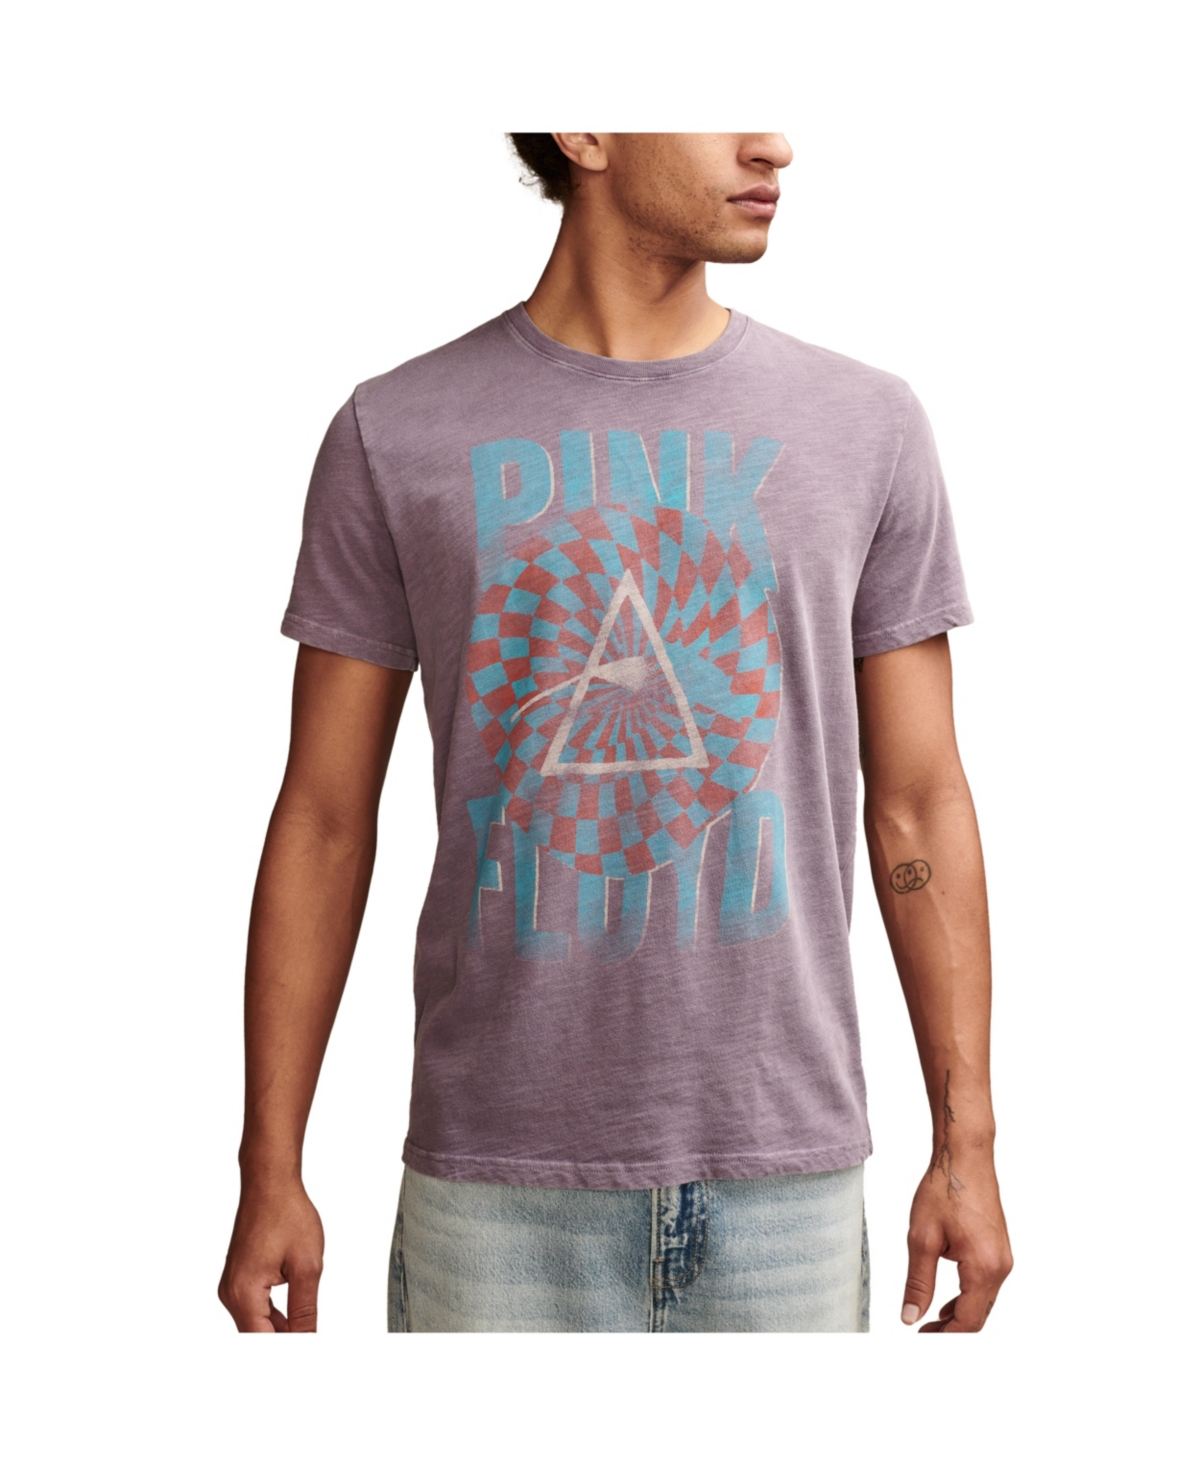 Men's Short Sleeve Pink Floyd Prism T-shirt - Rabbit